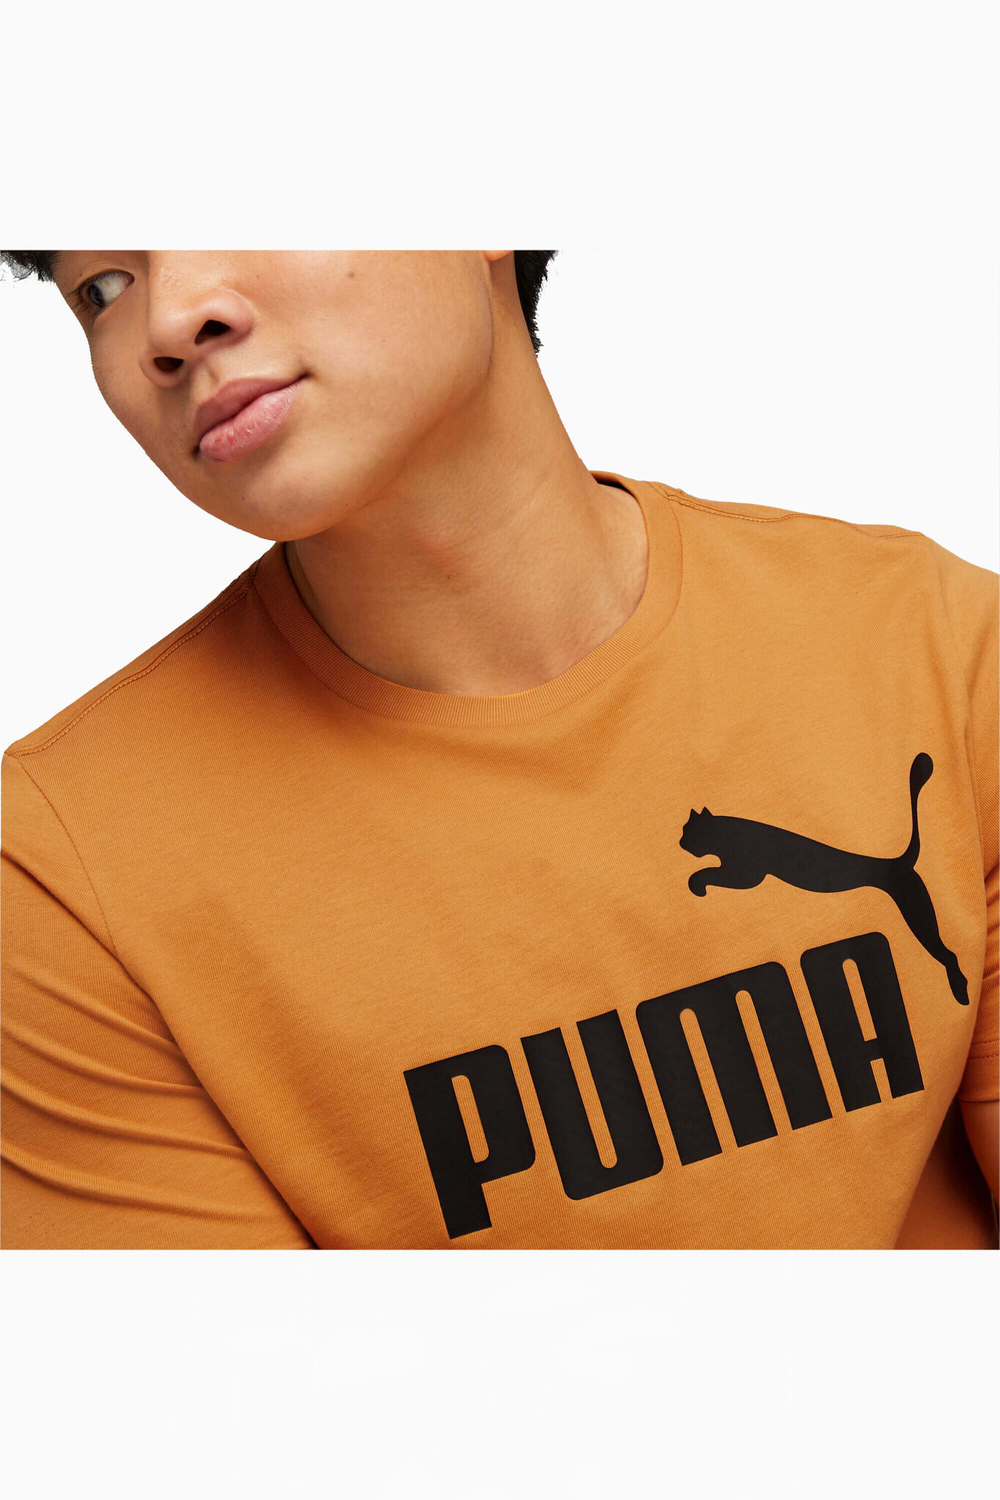 Футболка Puma Essentials Logo